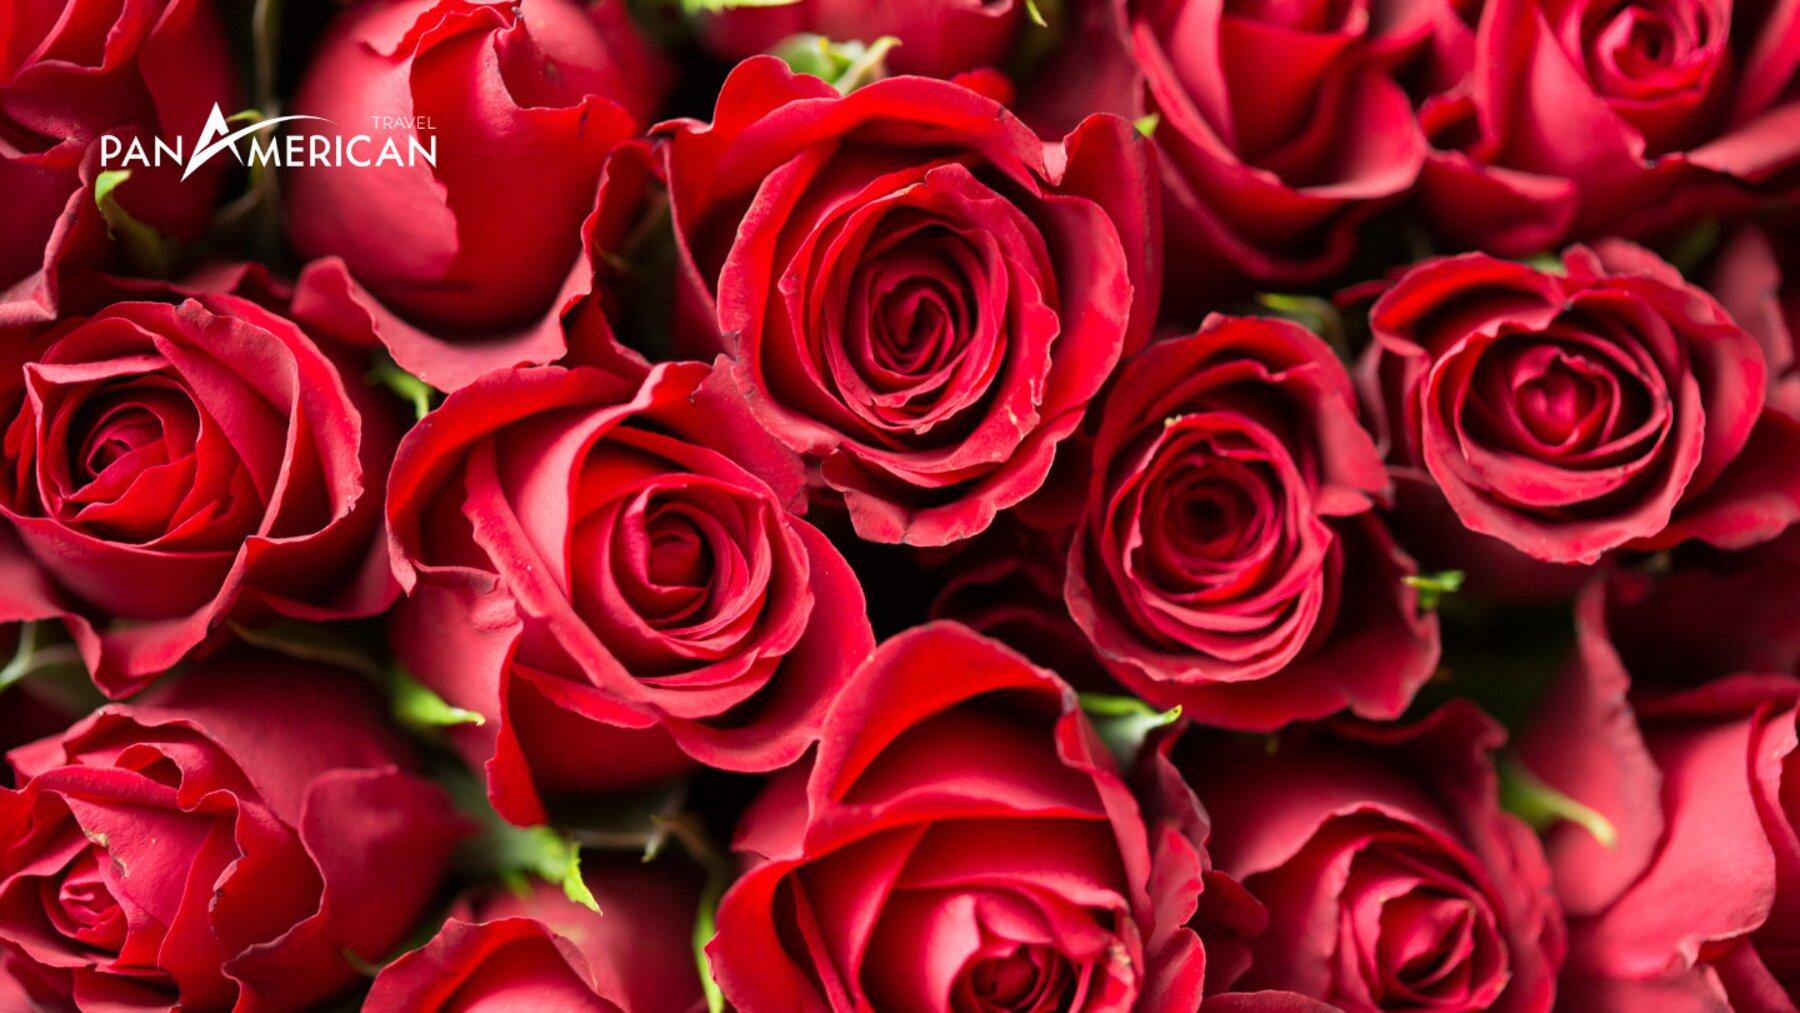 Hoa hồng - Hoa đẹp nhất thế giới